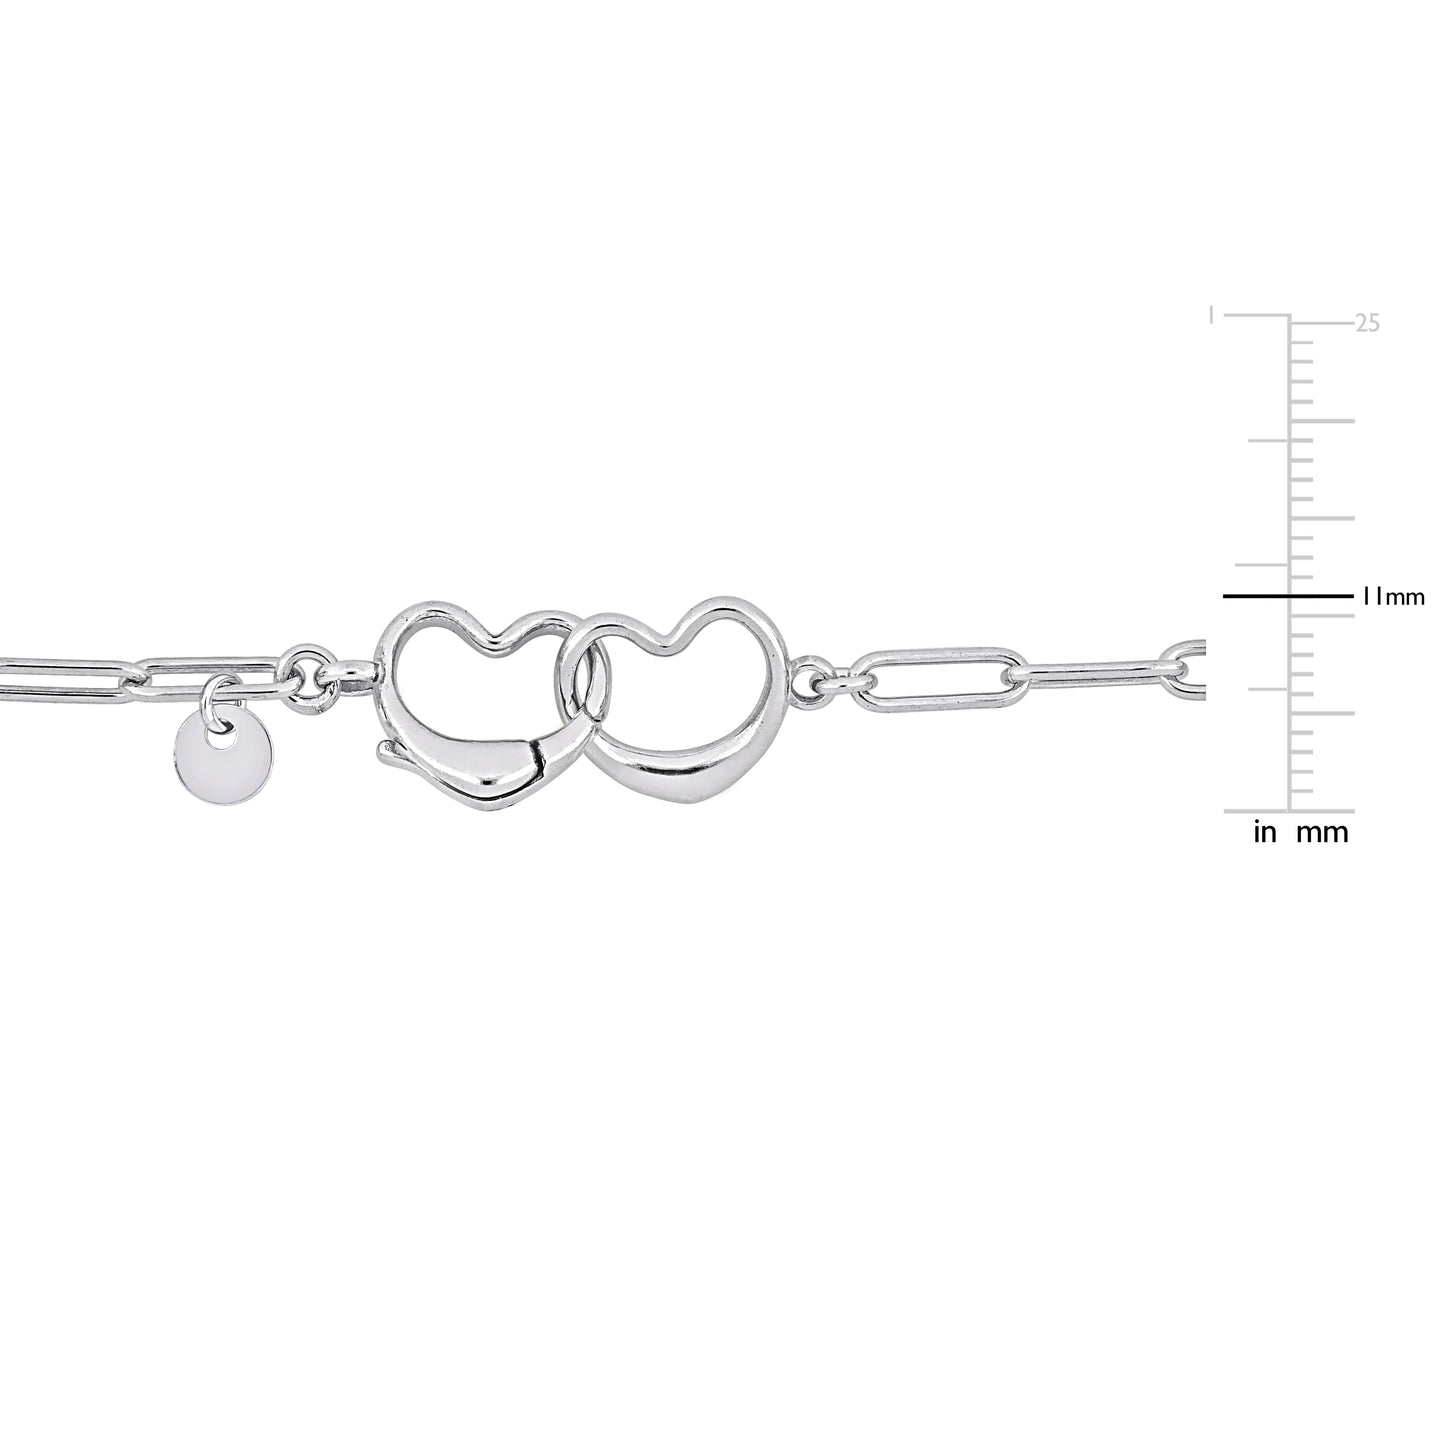 Silver White Paper Clip Link Bracelet w/ Double Heart Clasp 7.50